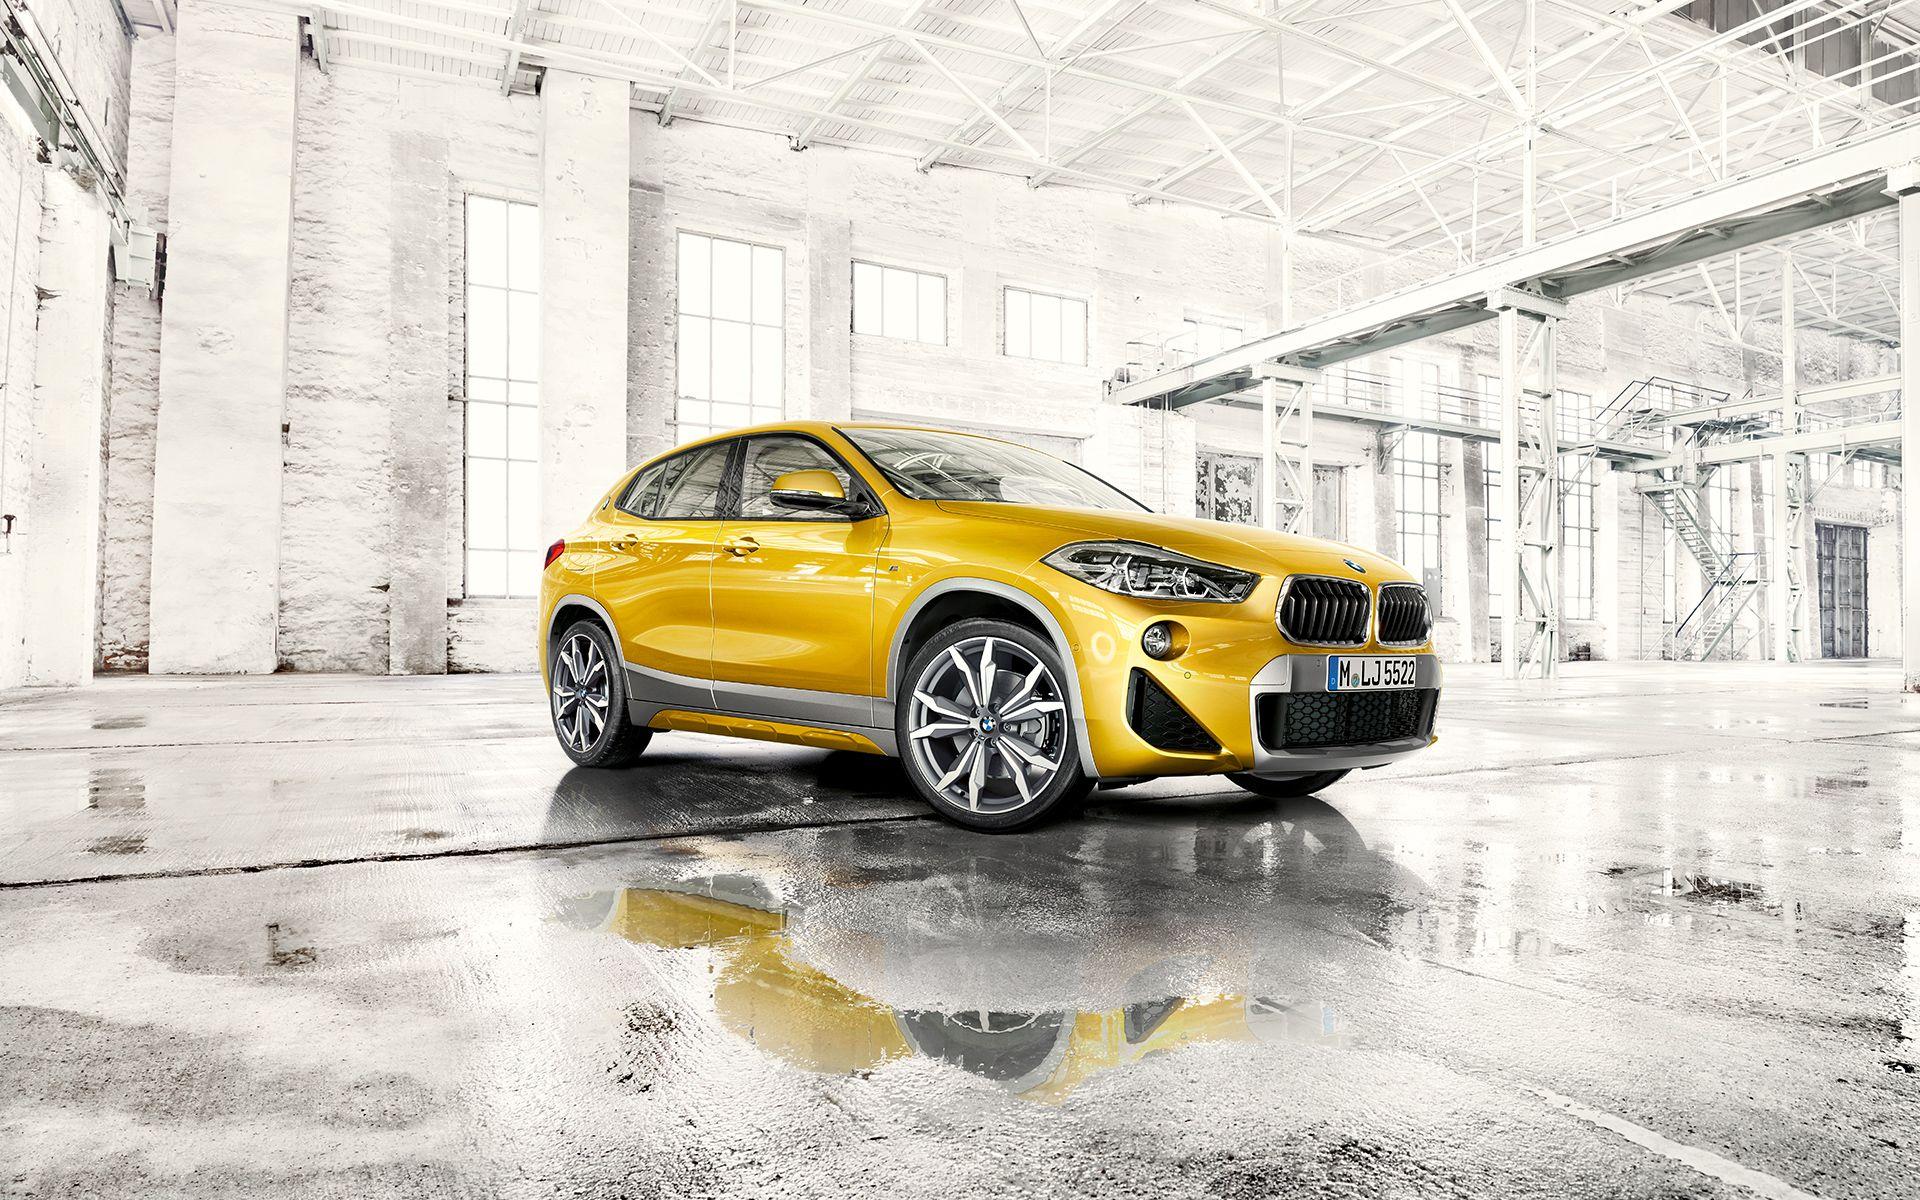 BMW X2: Image & Videos